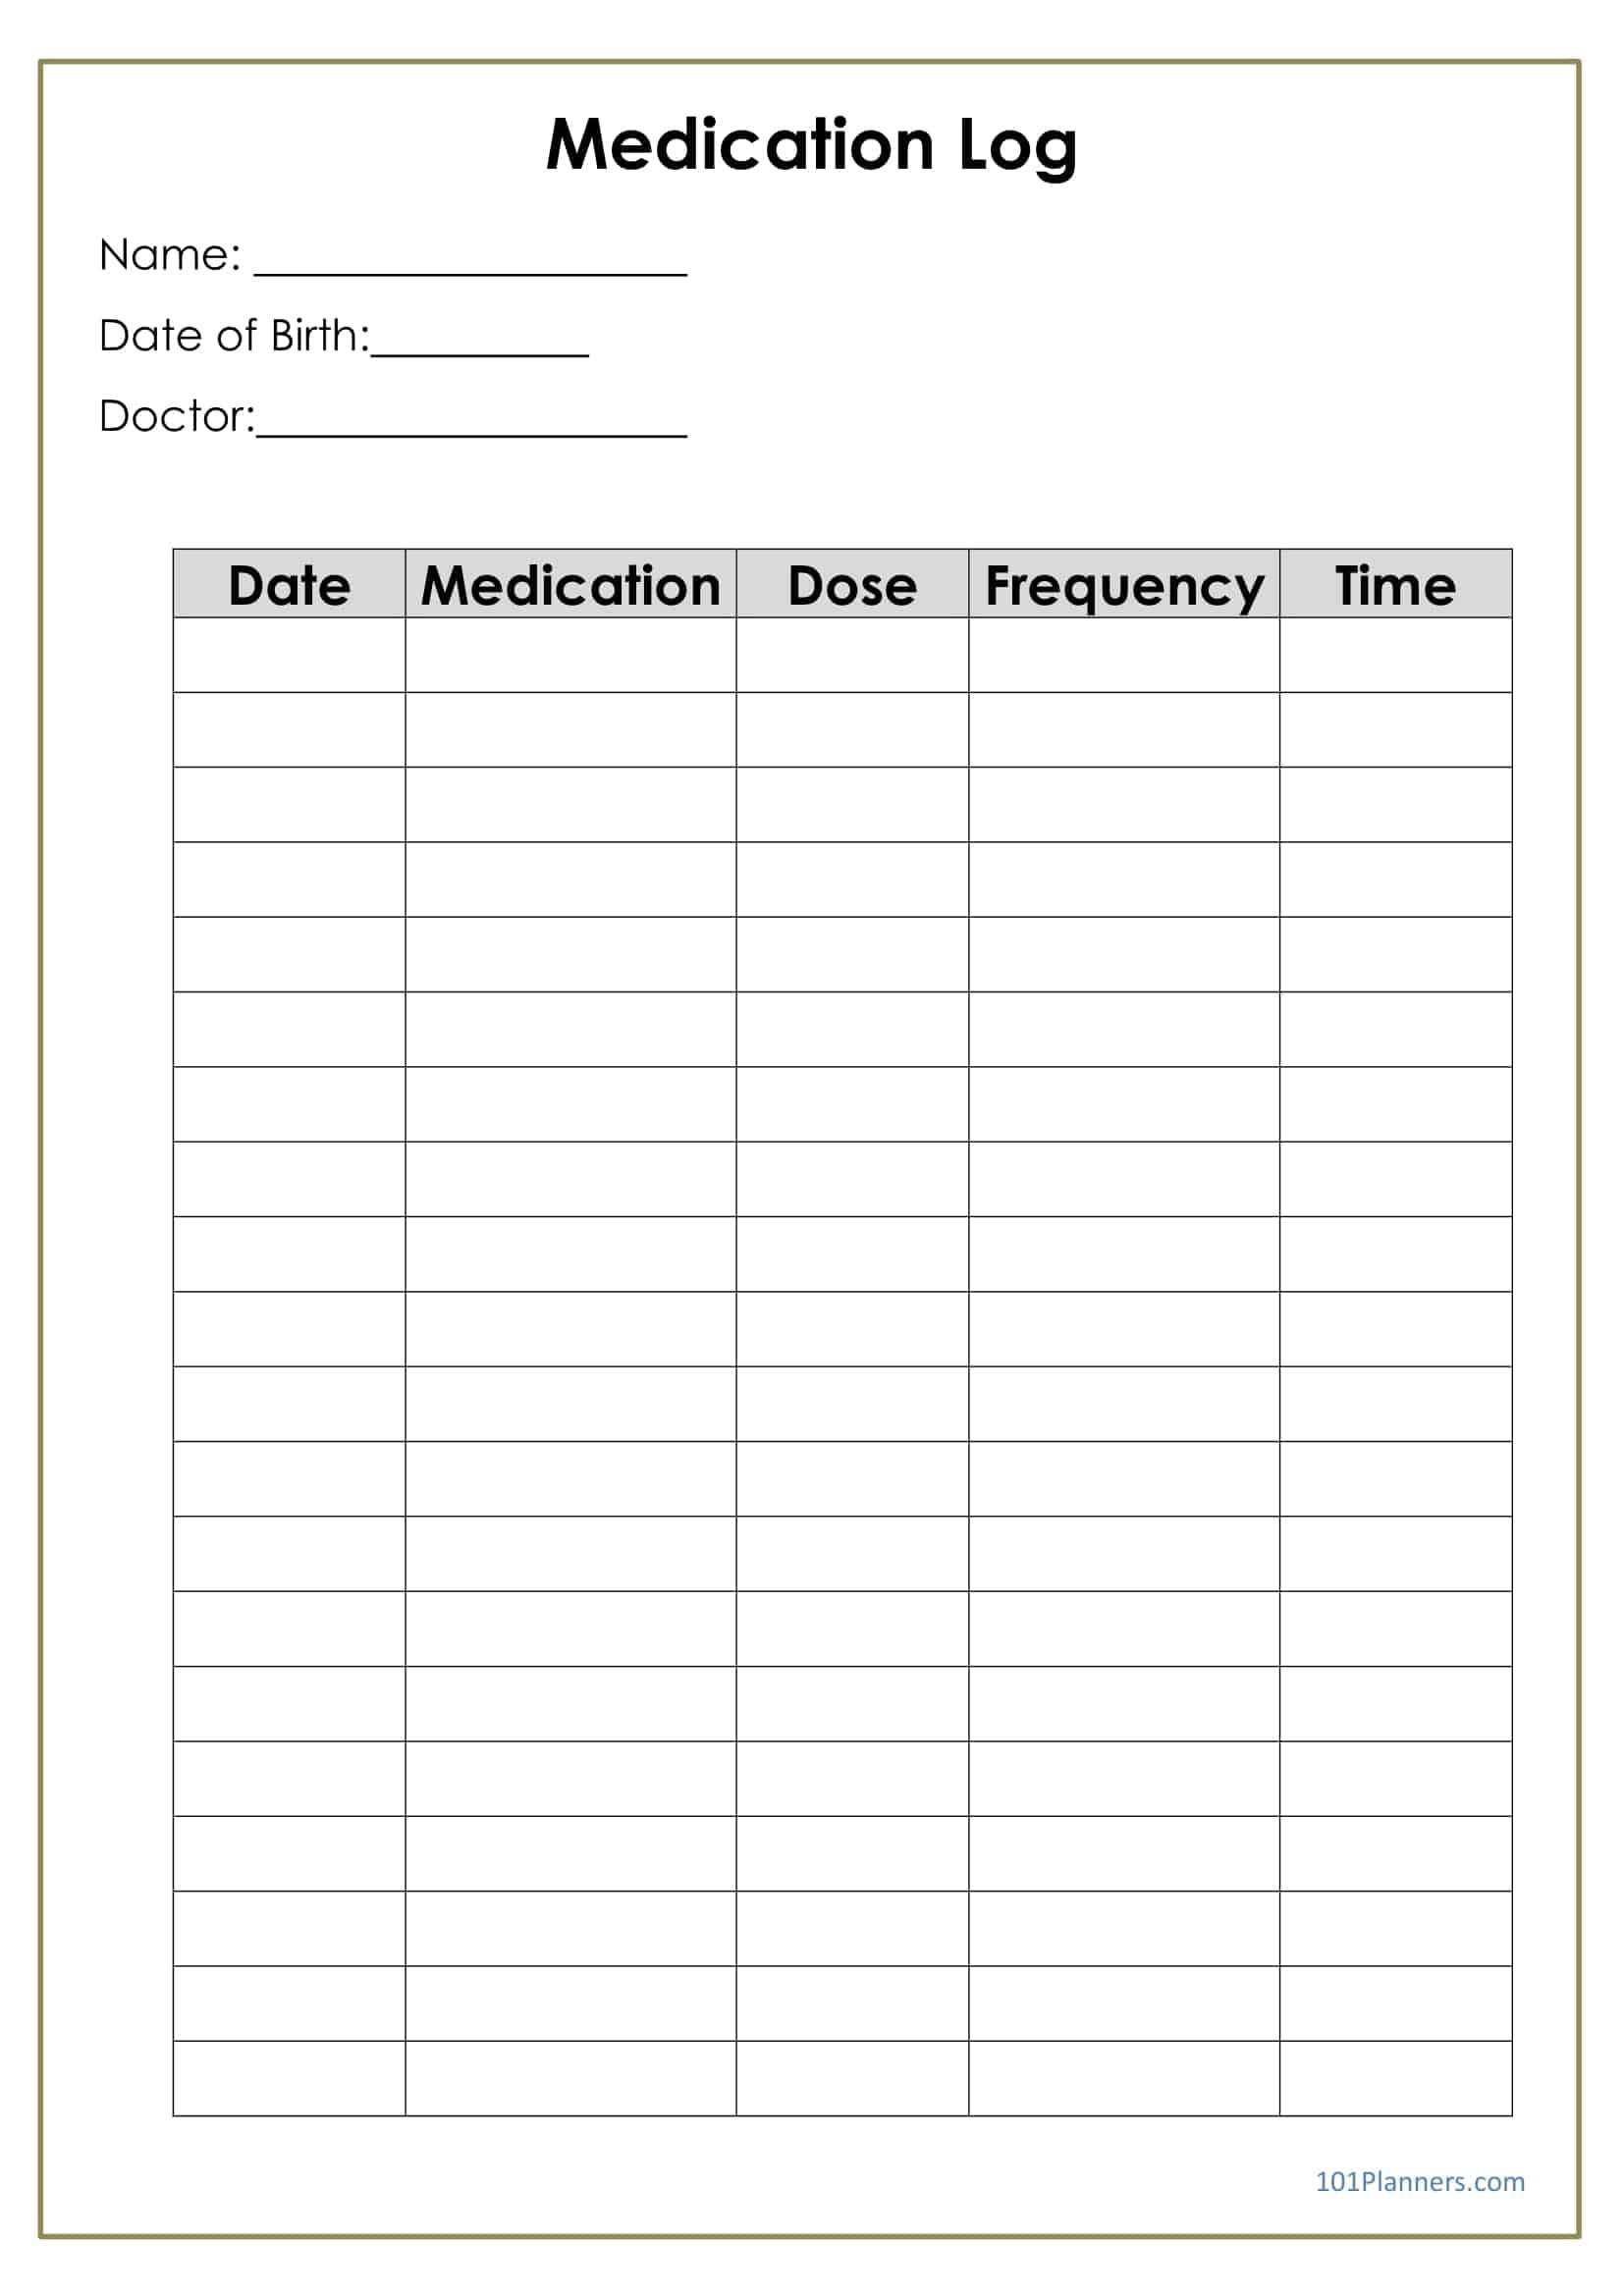 Medication Log - Free Printable Medication Log